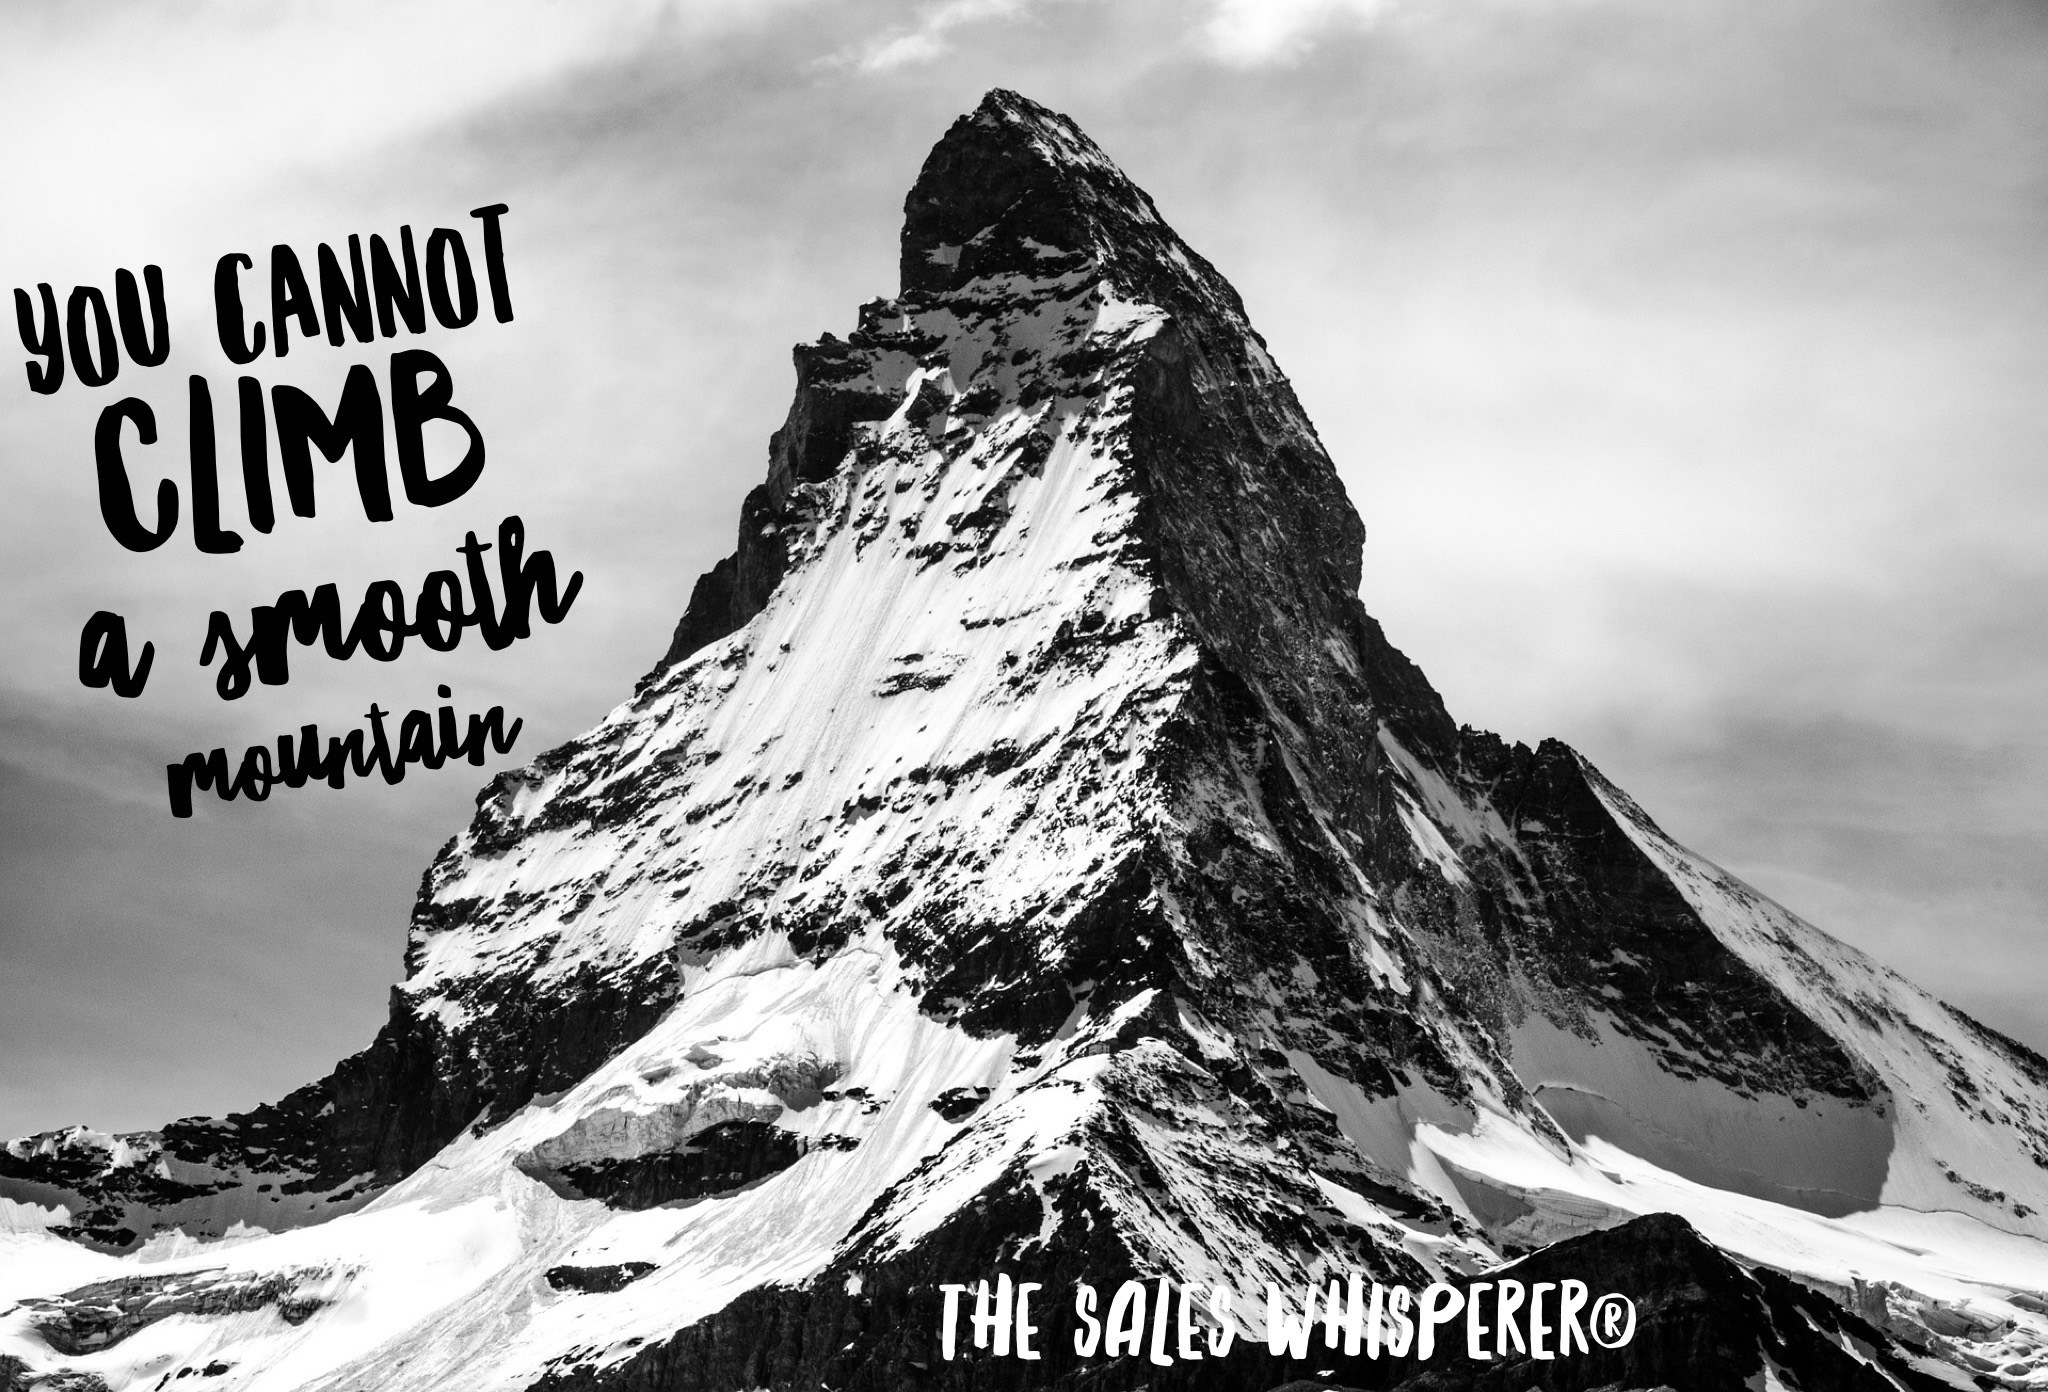 You_cannot_climb_a_smooth_mountain-1.jpg